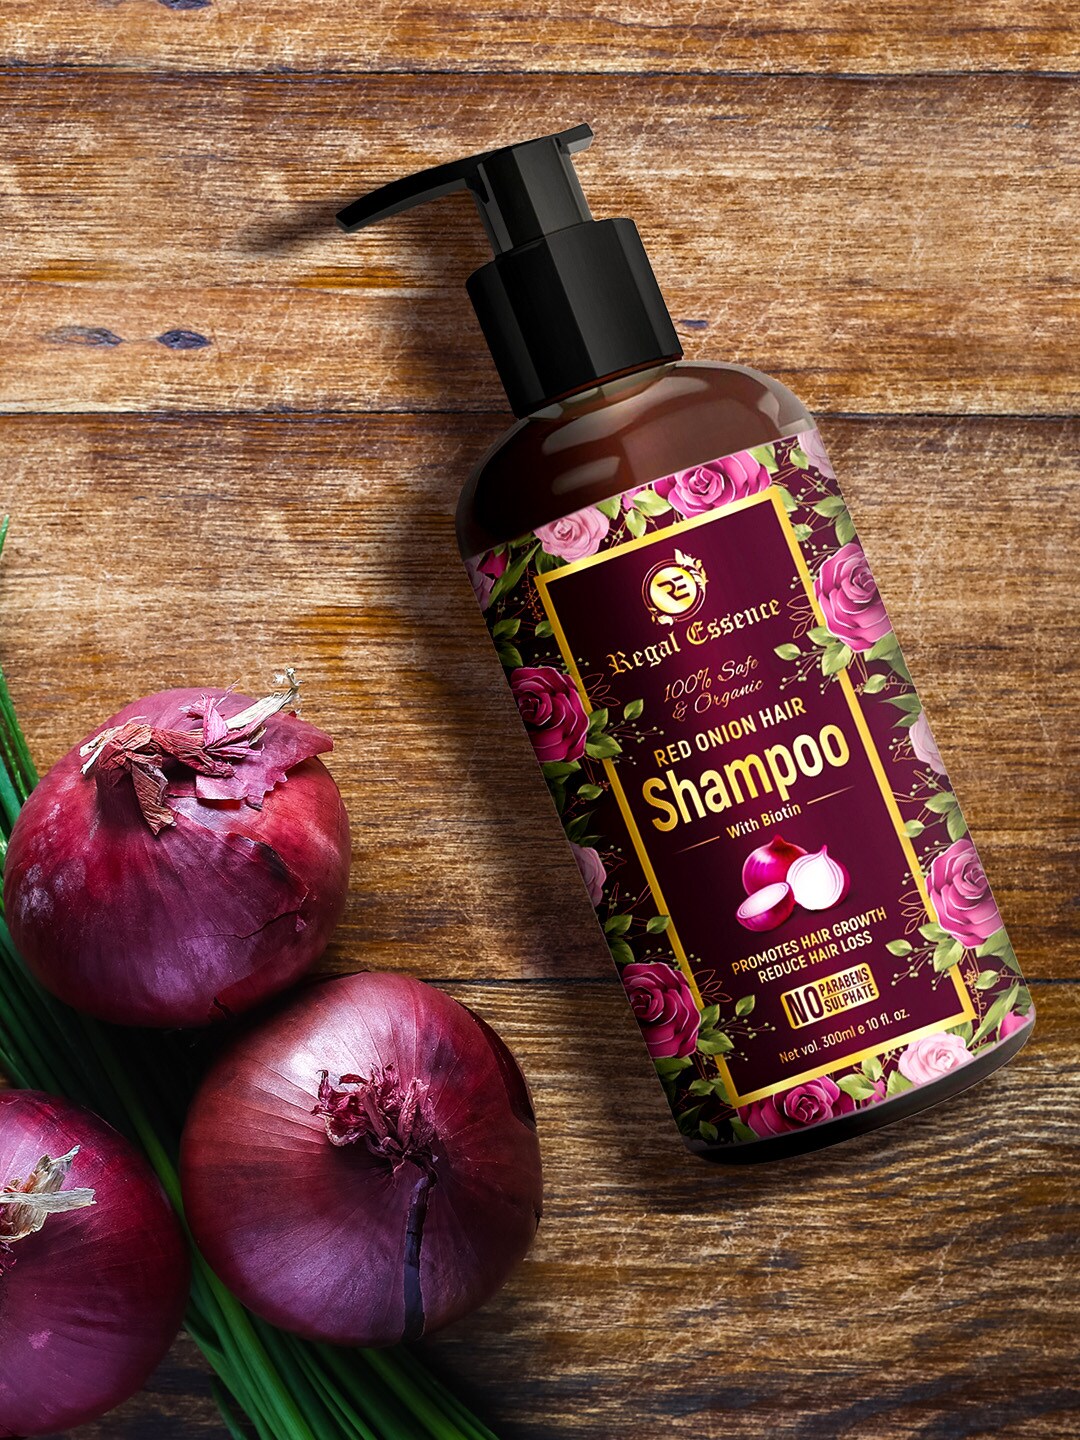 Regal Essence Red Onion Shampoo 300 ml Price in India